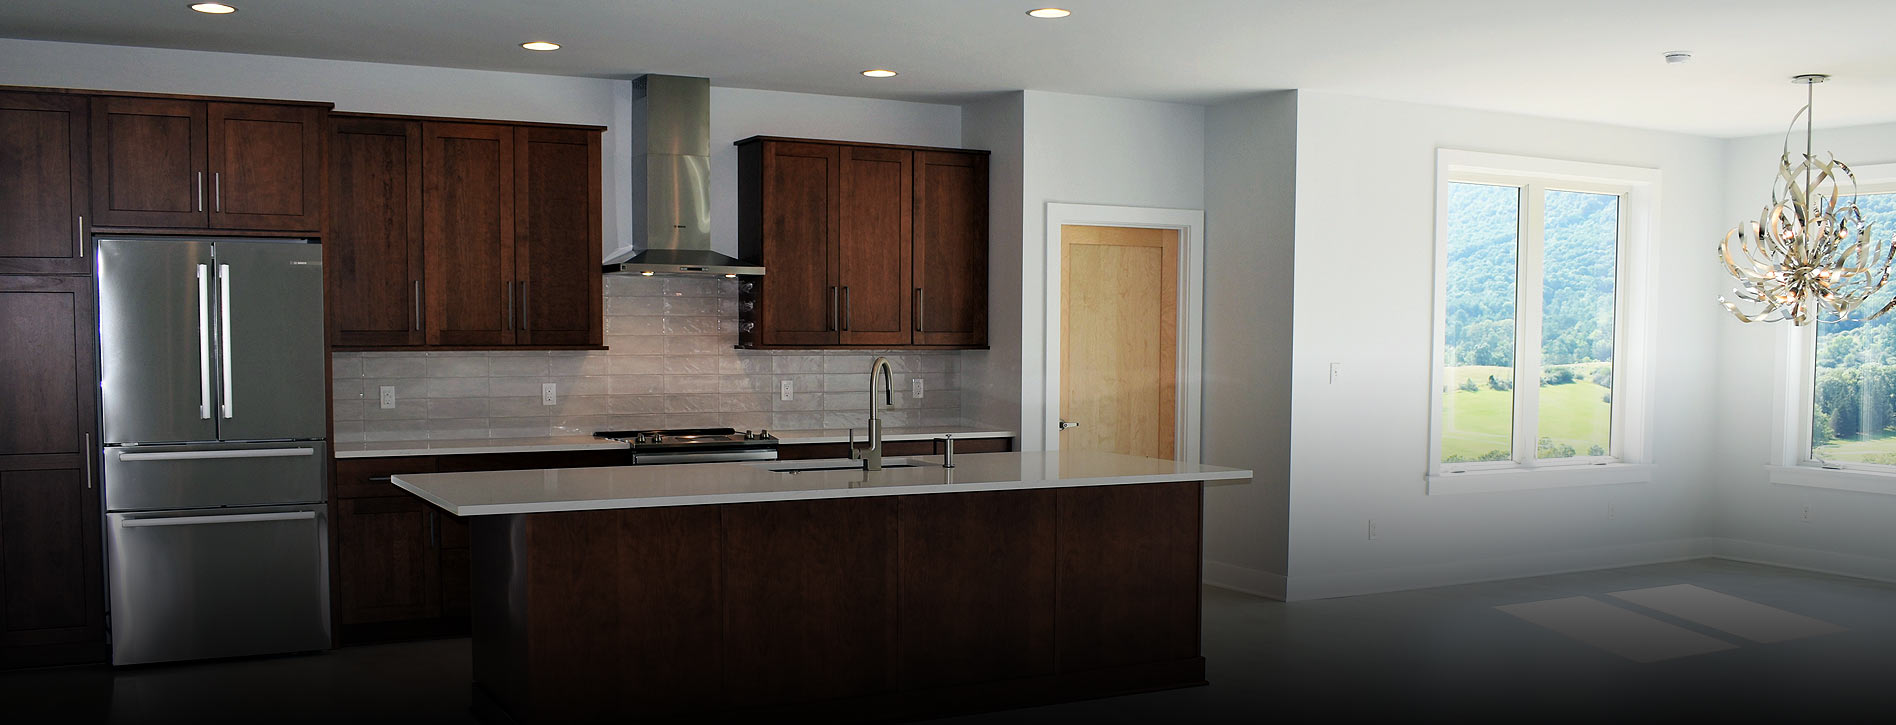 Contemporary Kitchen Design by John J. Castle General Contractor - Altoona, PA